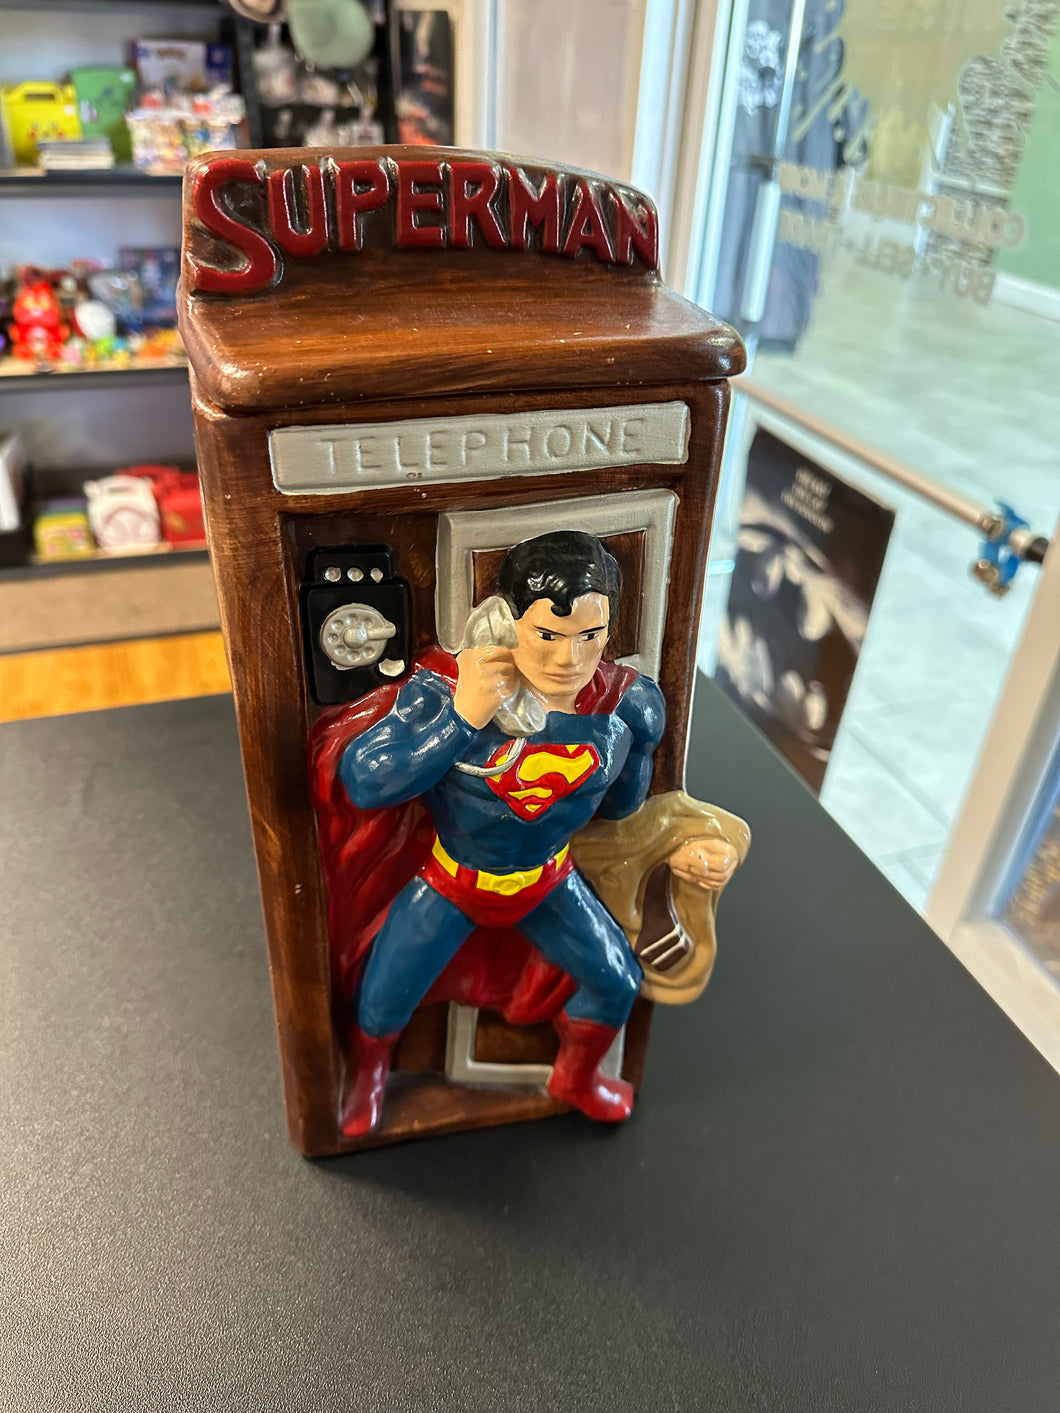 Superman Telephone Booth 1978 Cookie Jar